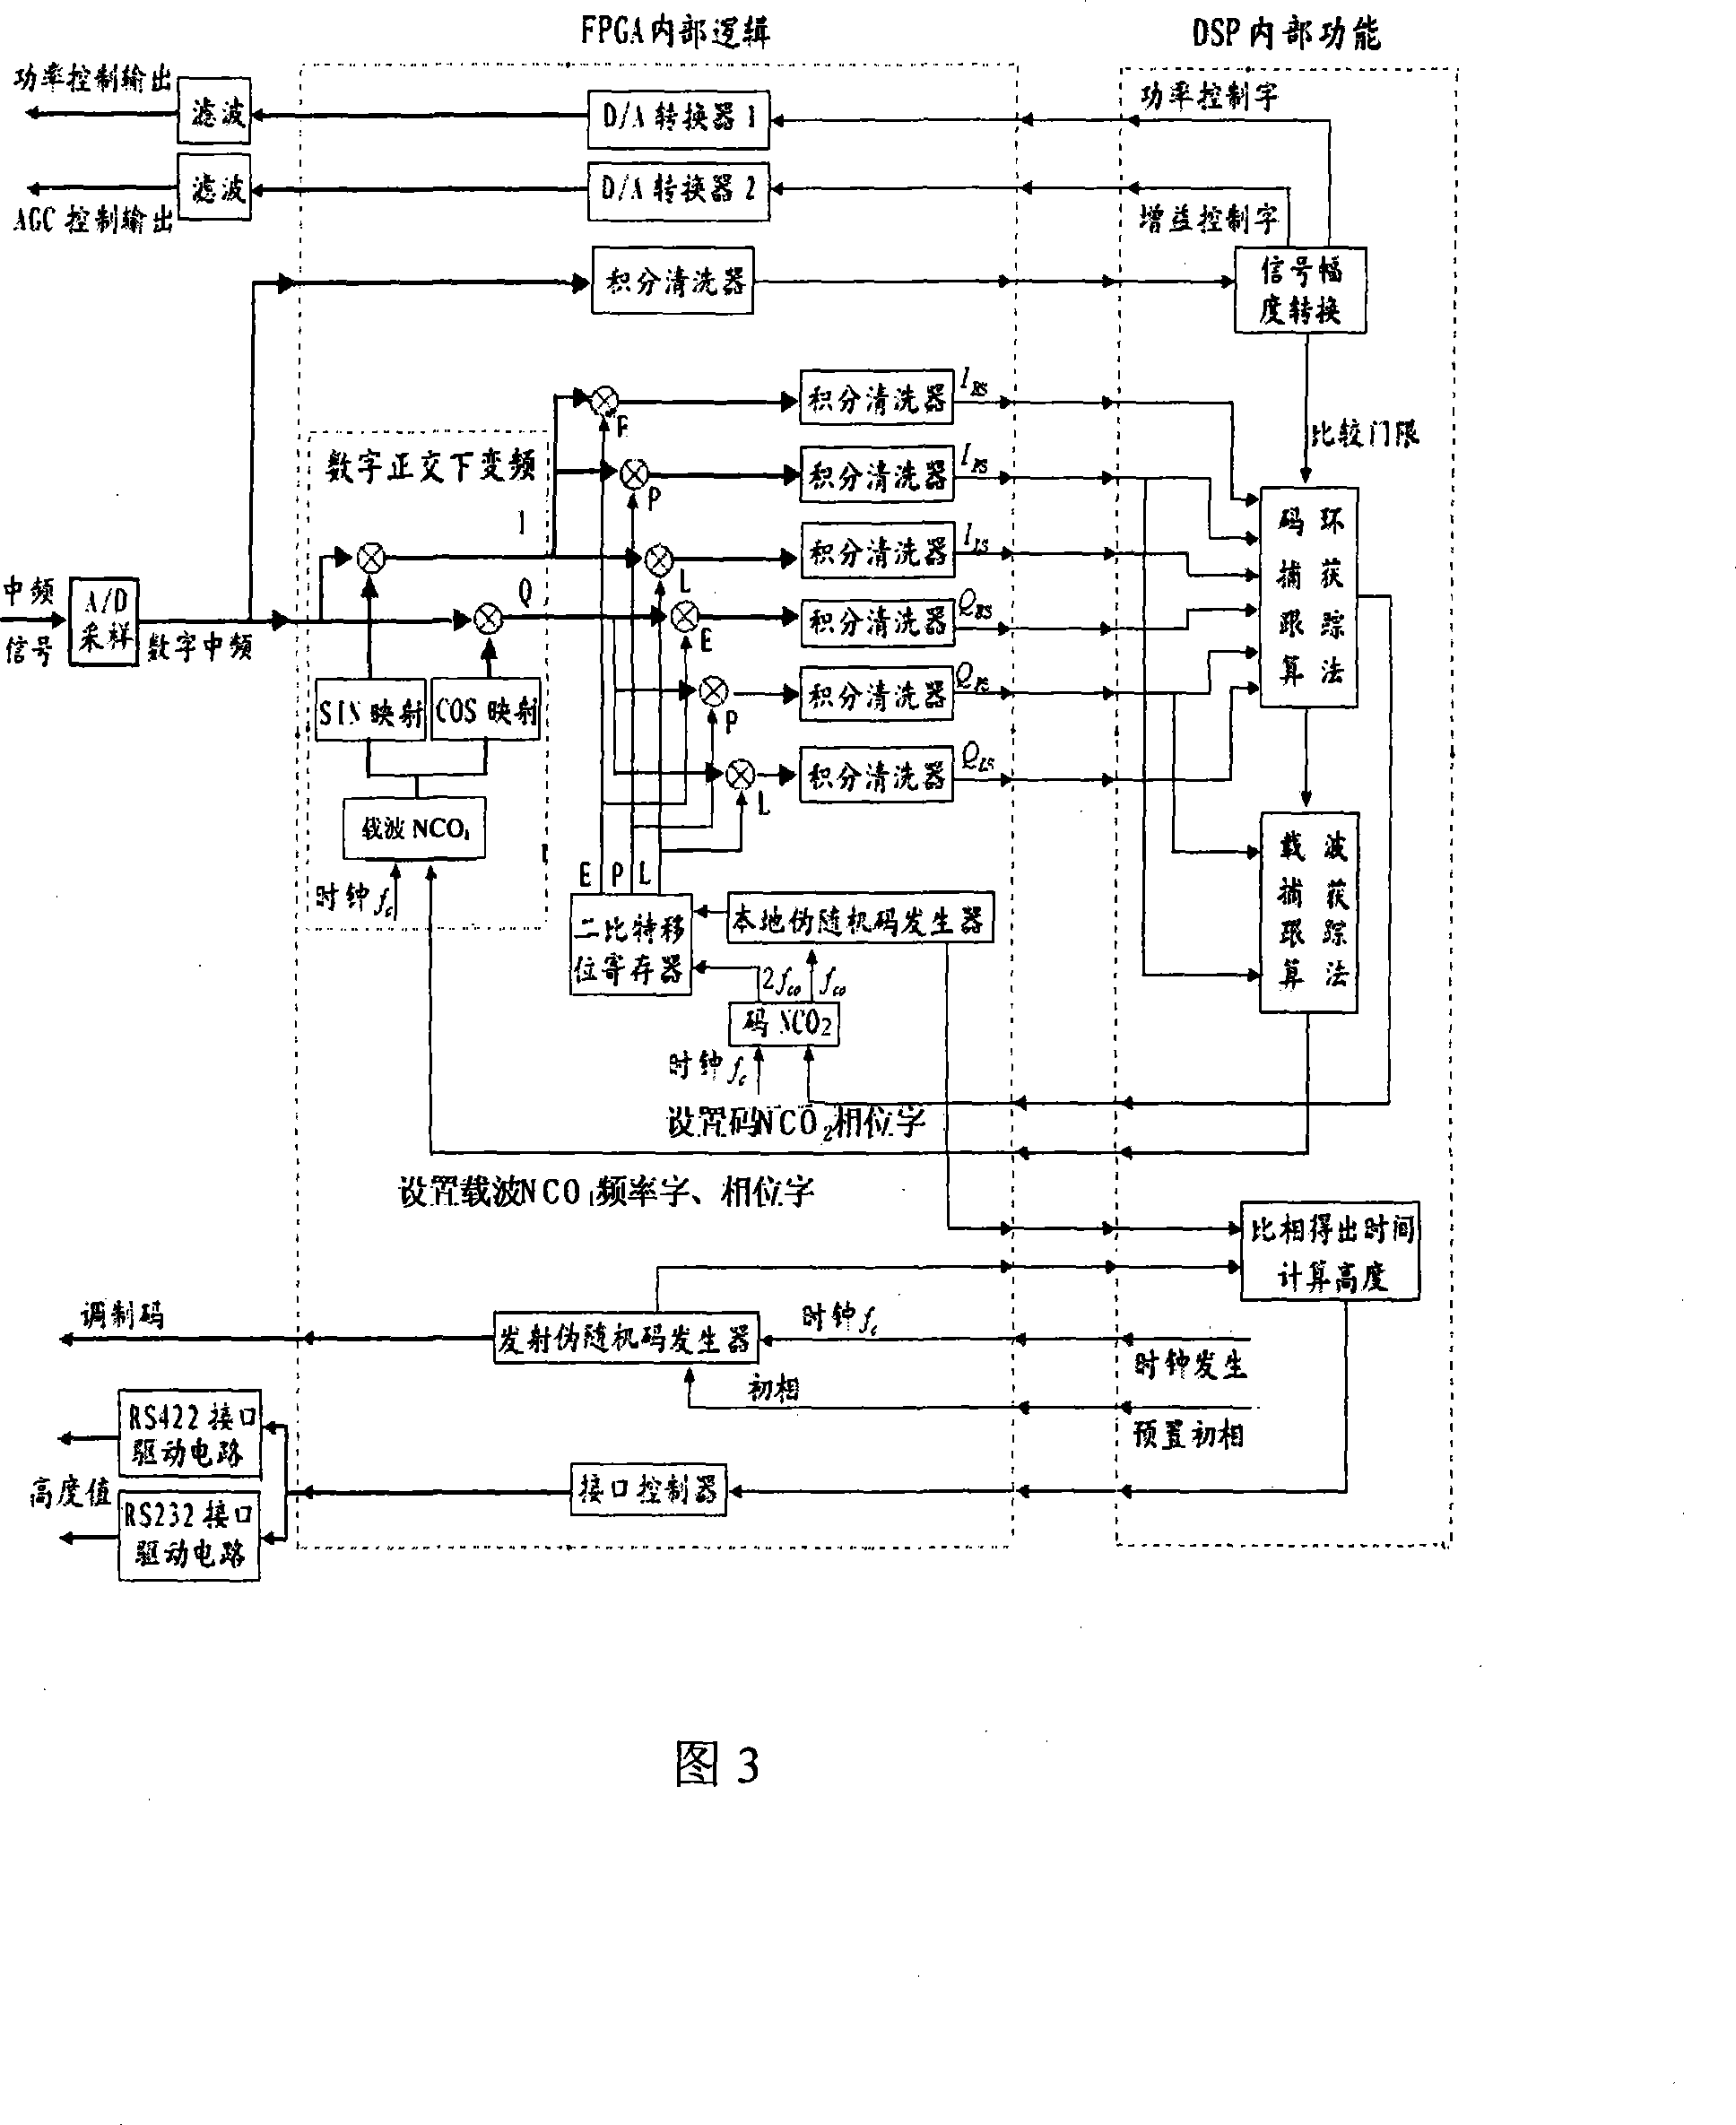 Transmitting altimeter based on pseudo-code ranging and pseudo-code method